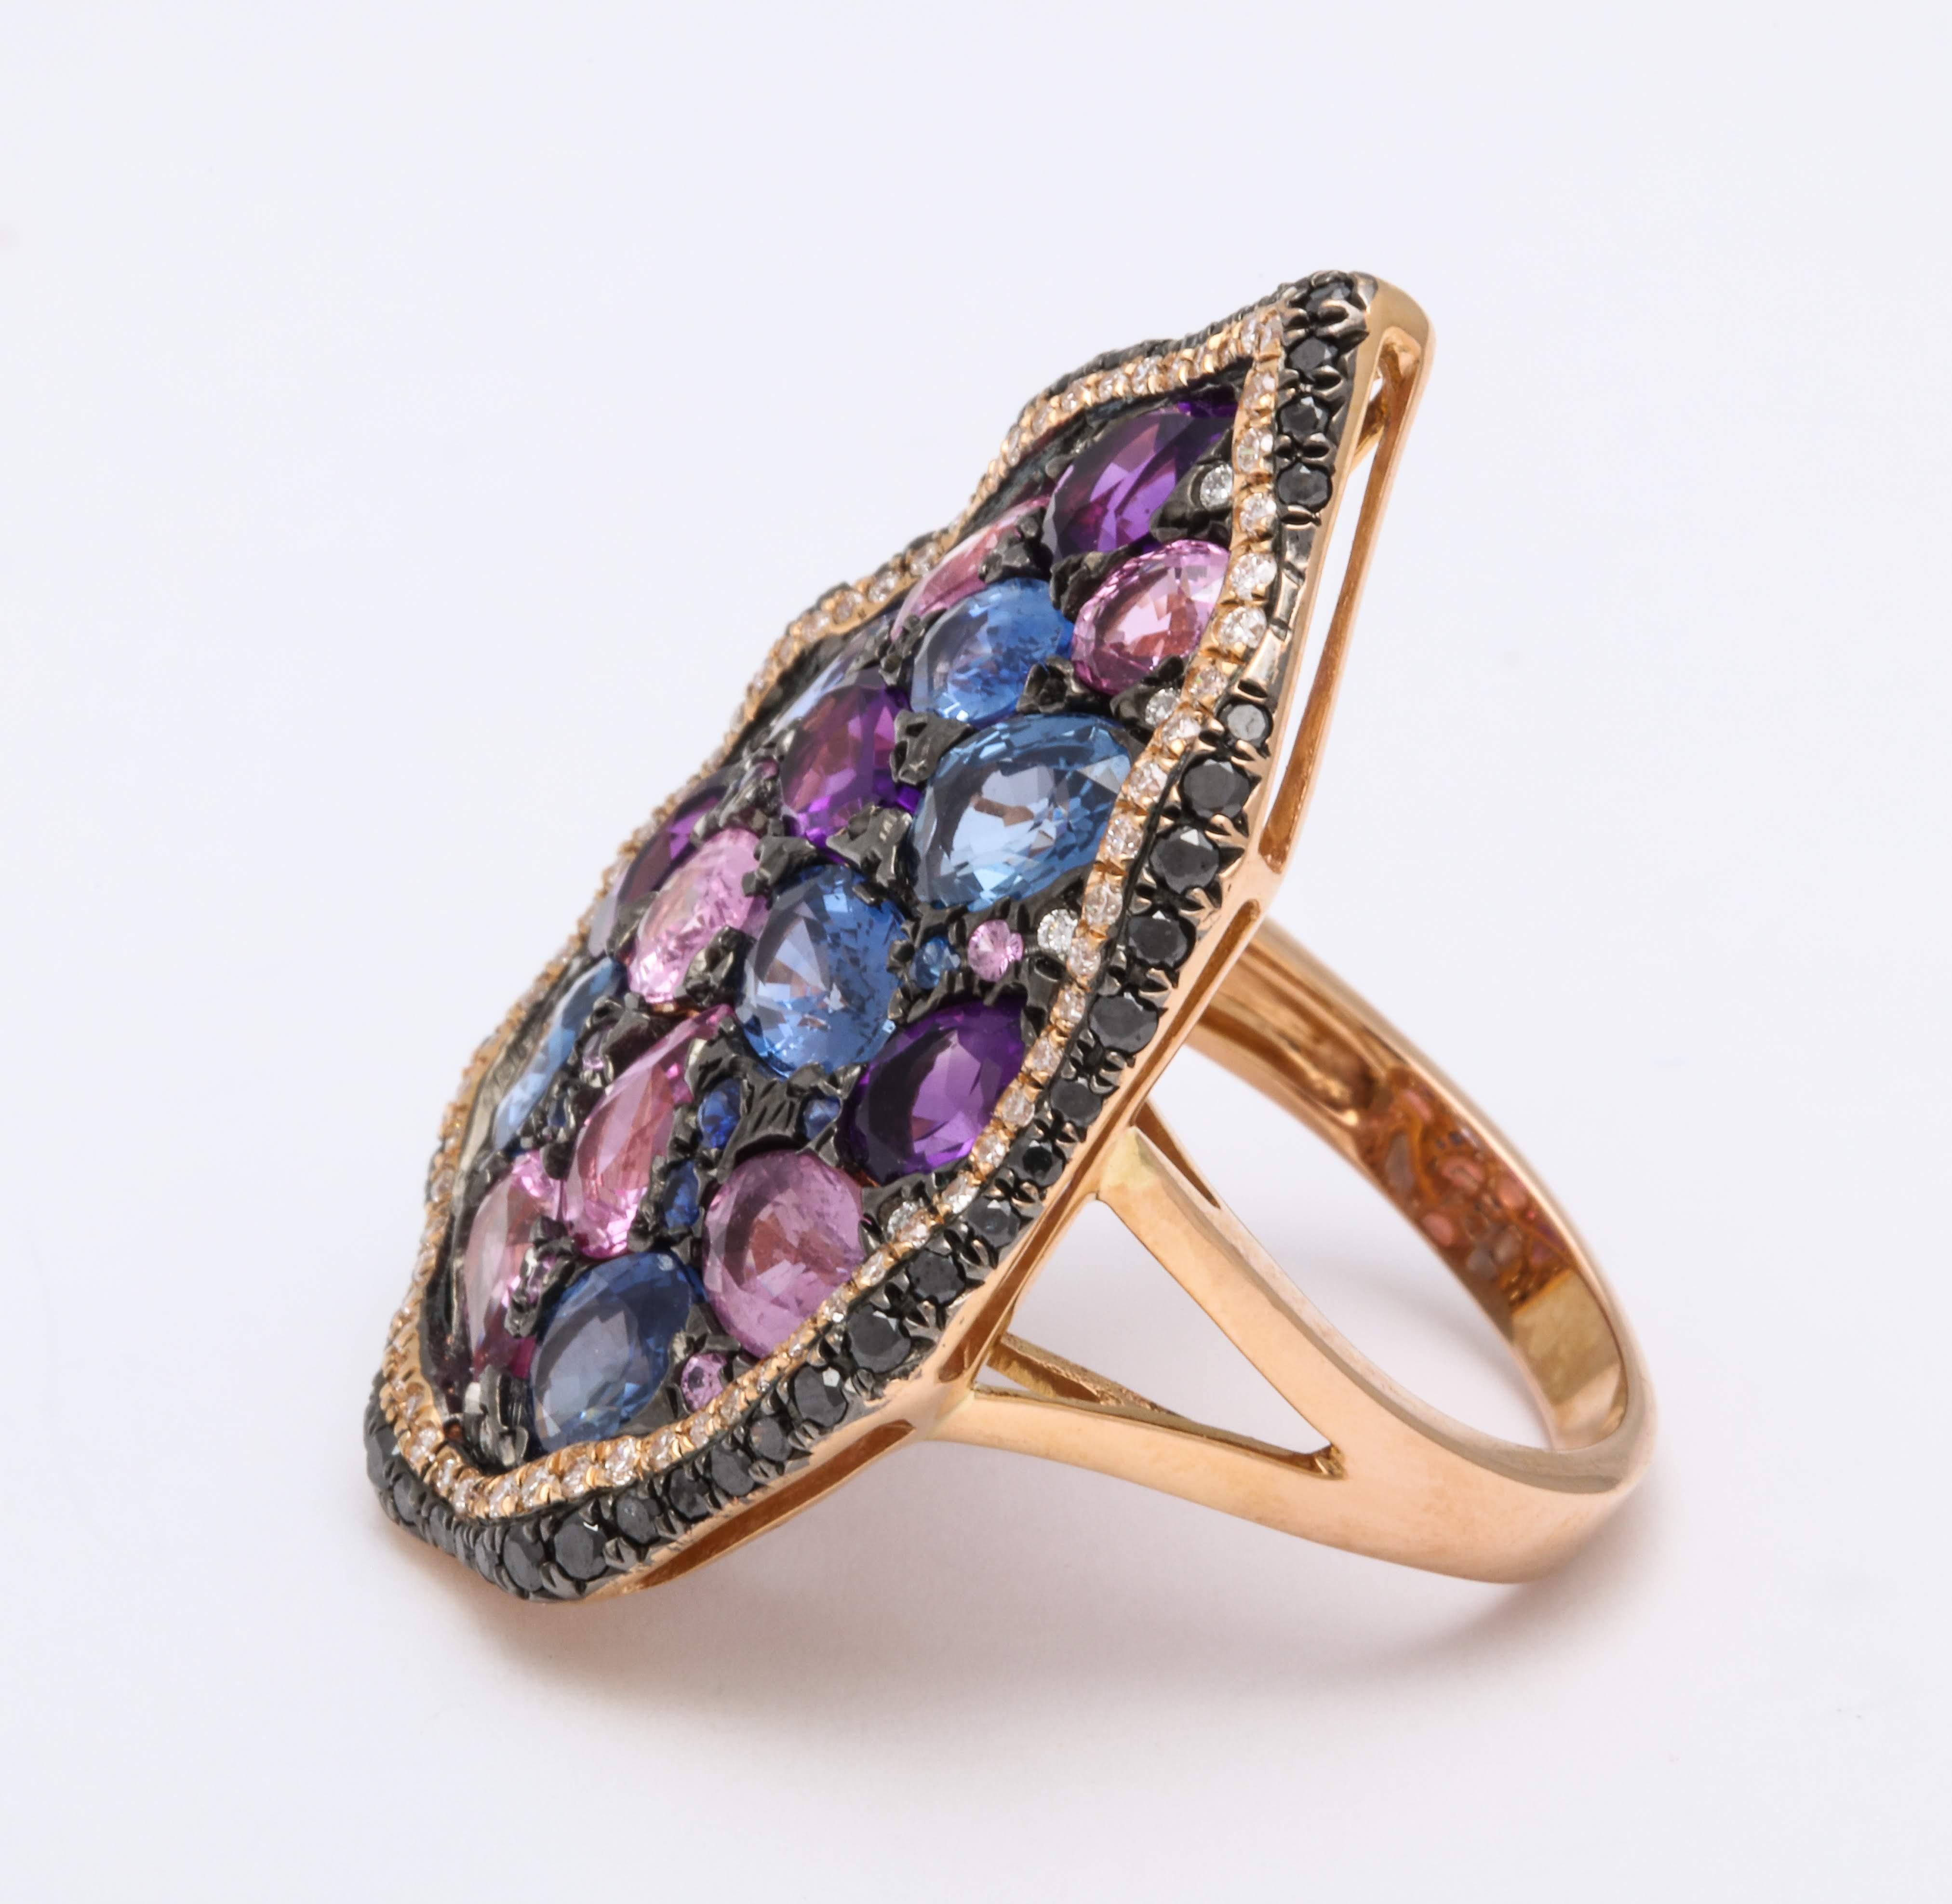 Blue Sapphire, Pink Sapphire, Amethyst, Black Diamond and Diamond Cocktail Ring (Romantik)